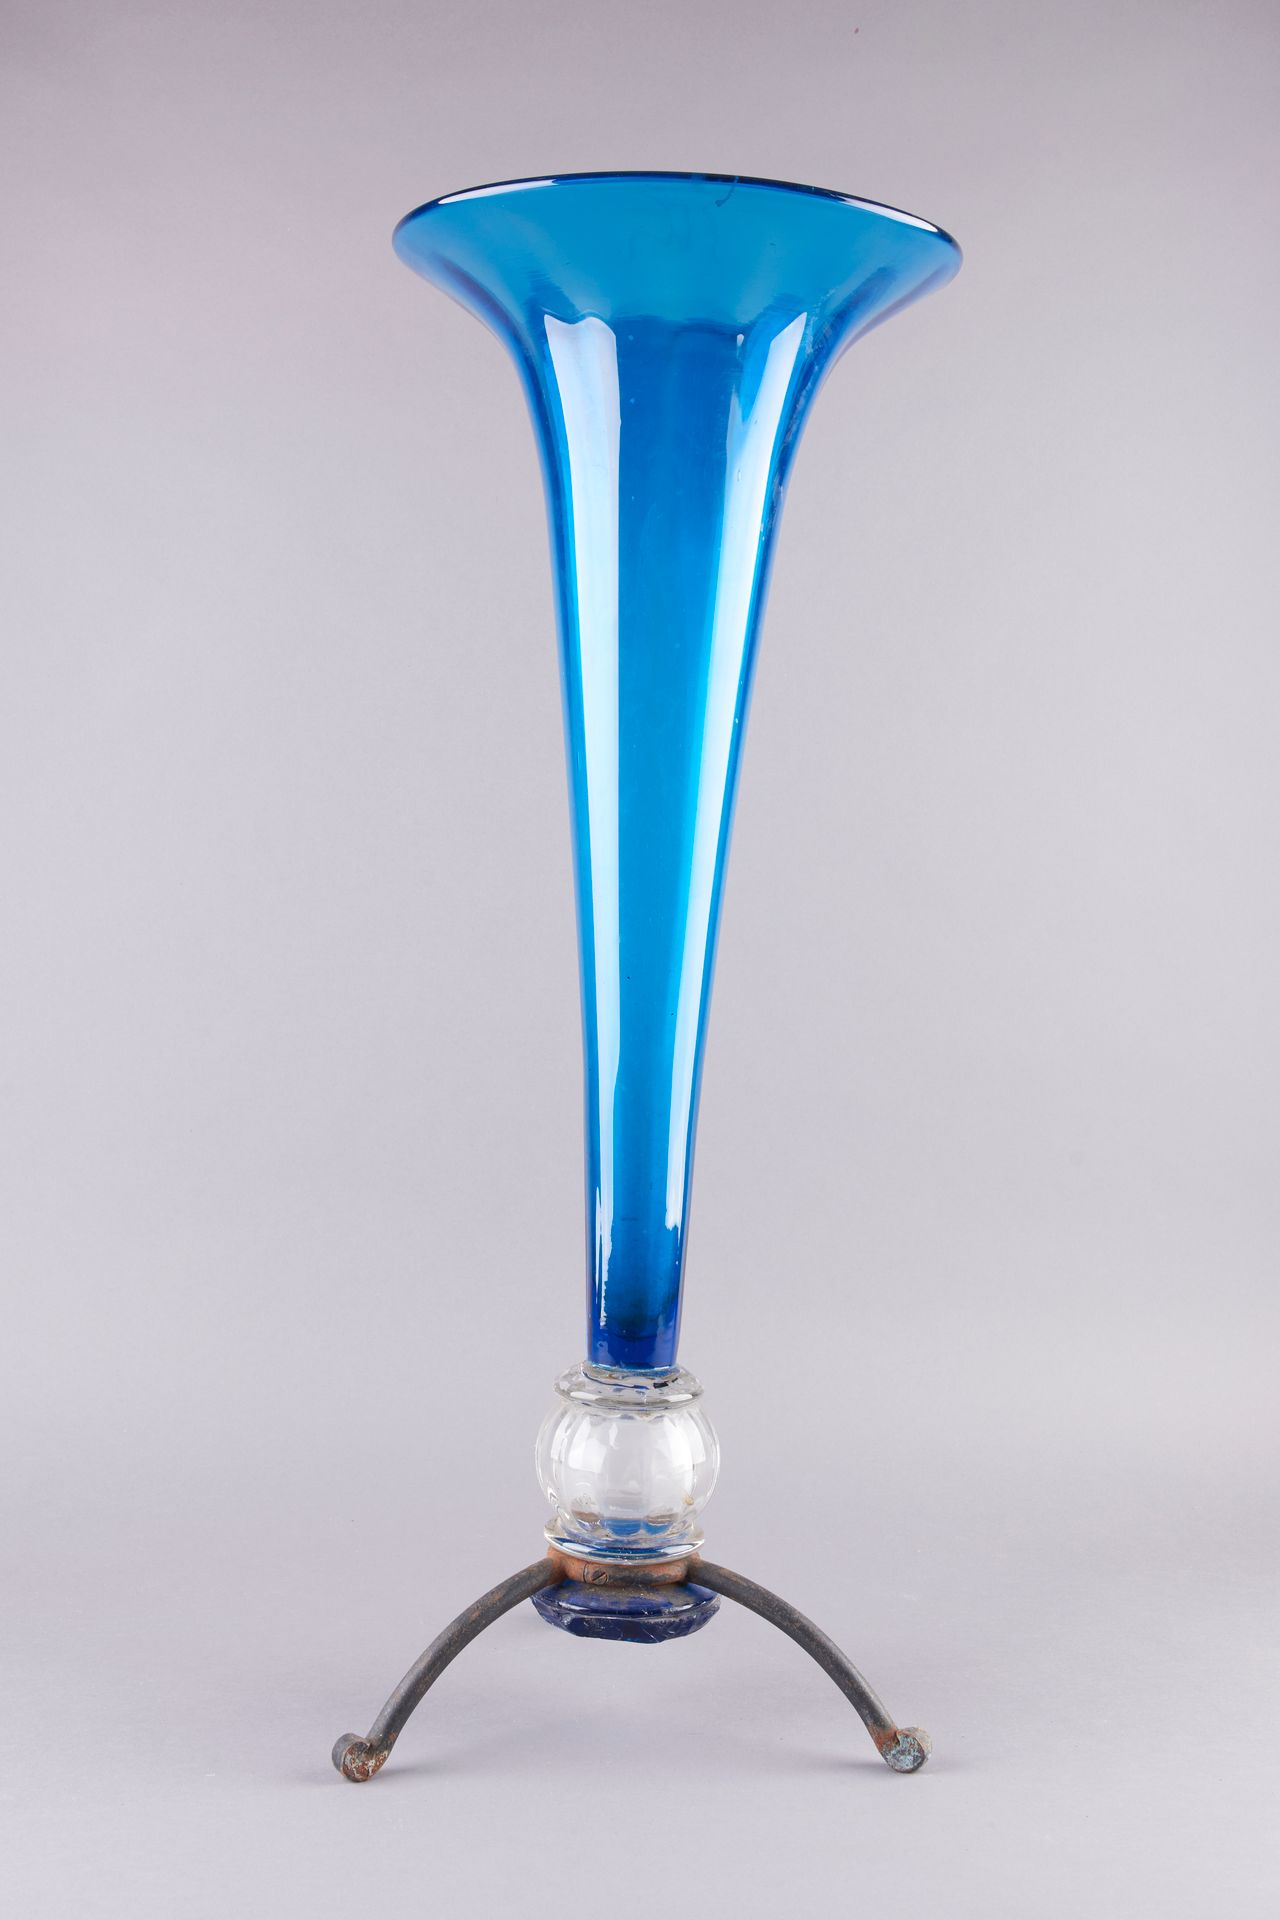 Null 大型蓝色玻璃花瓶，颈部呈喇叭状，末端是一个半透明的球体。锻铁三角架。高71厘米。直径27厘米